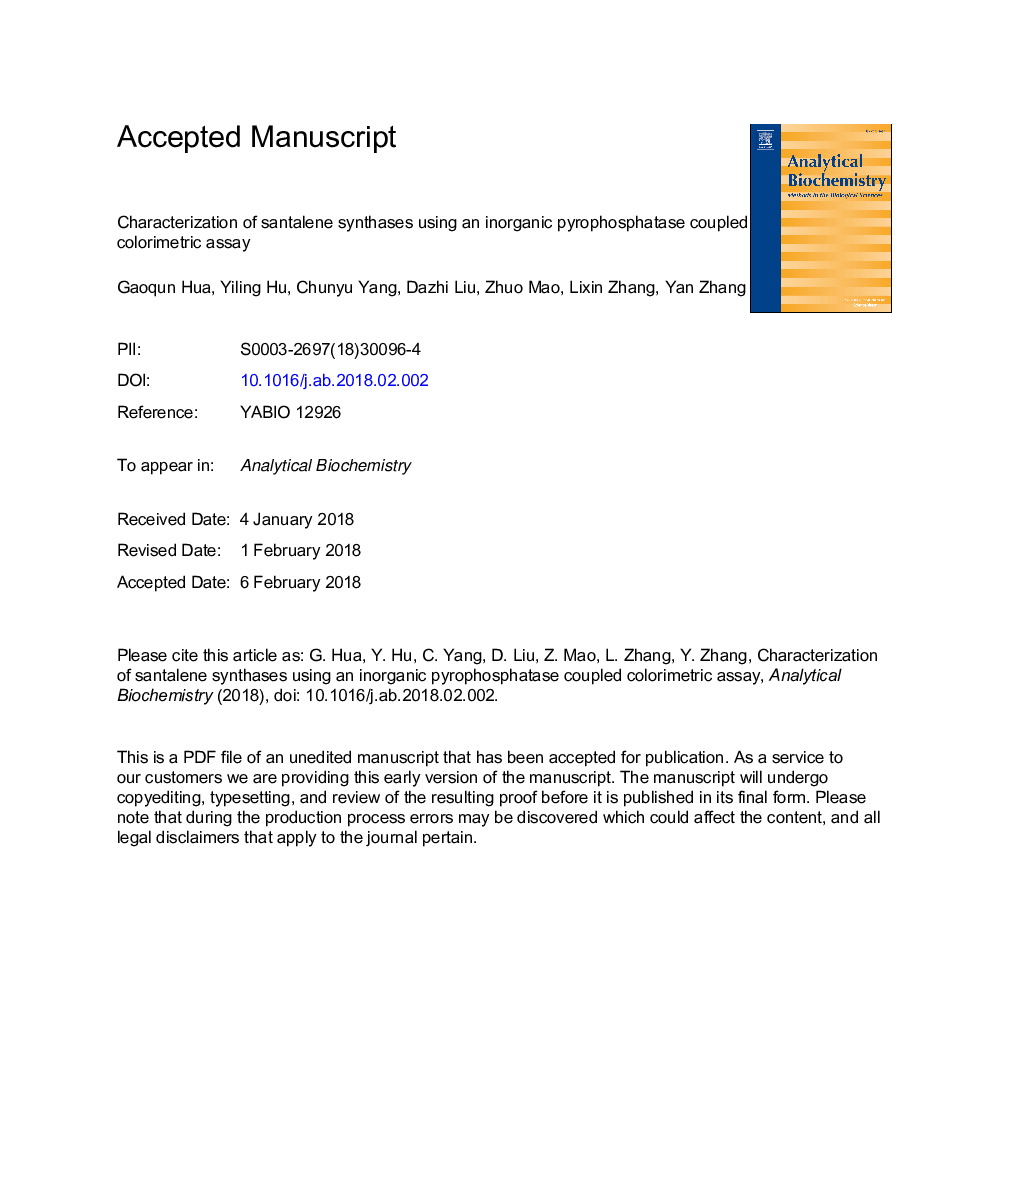 Characterization of santalene synthases using an inorganic pyrophosphatase coupled colorimetric assay